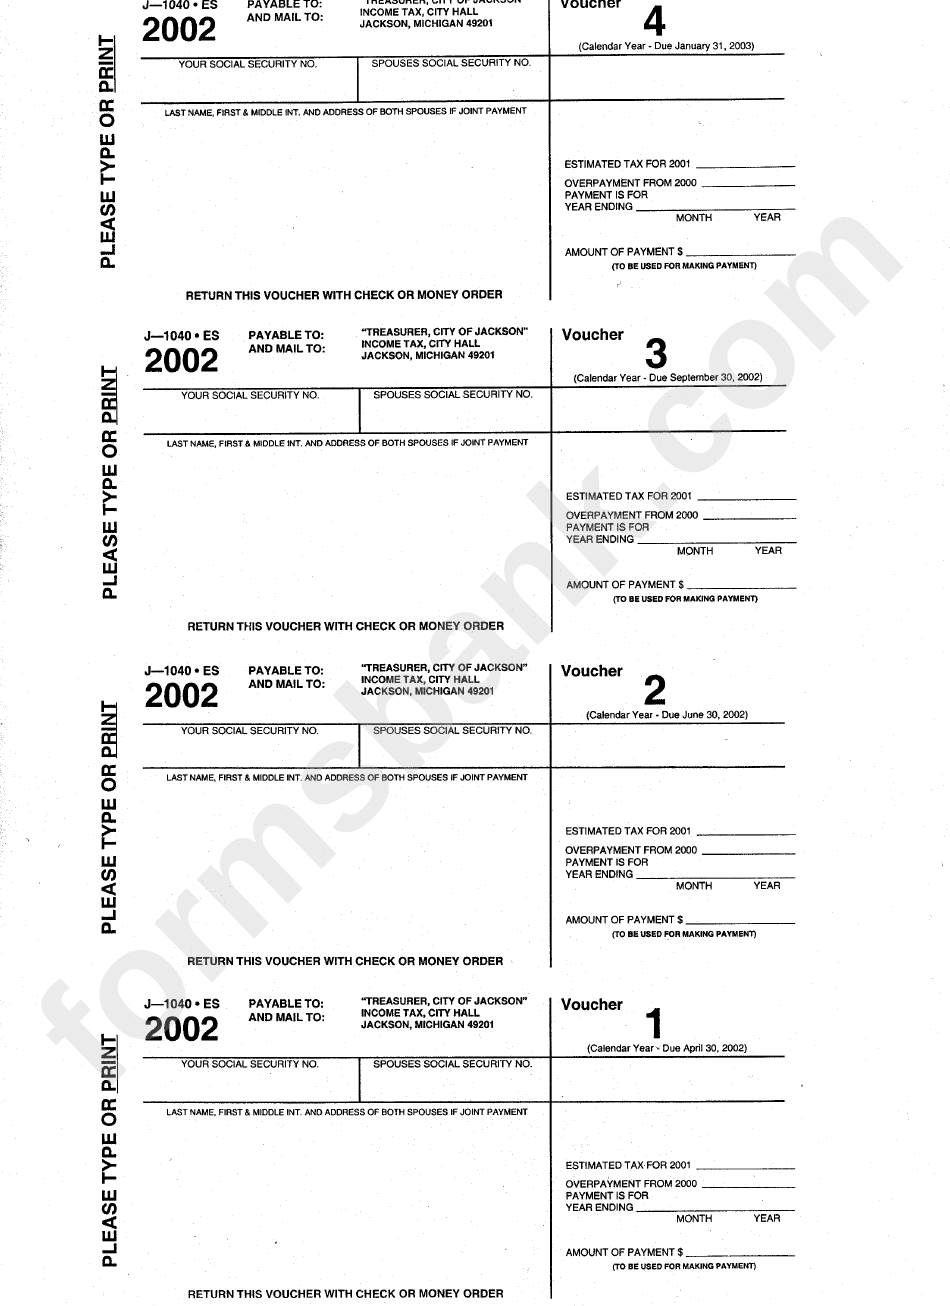 Form J-1040-Es - Estimated Tax Vouchers - Jackson, Michigan - 2002